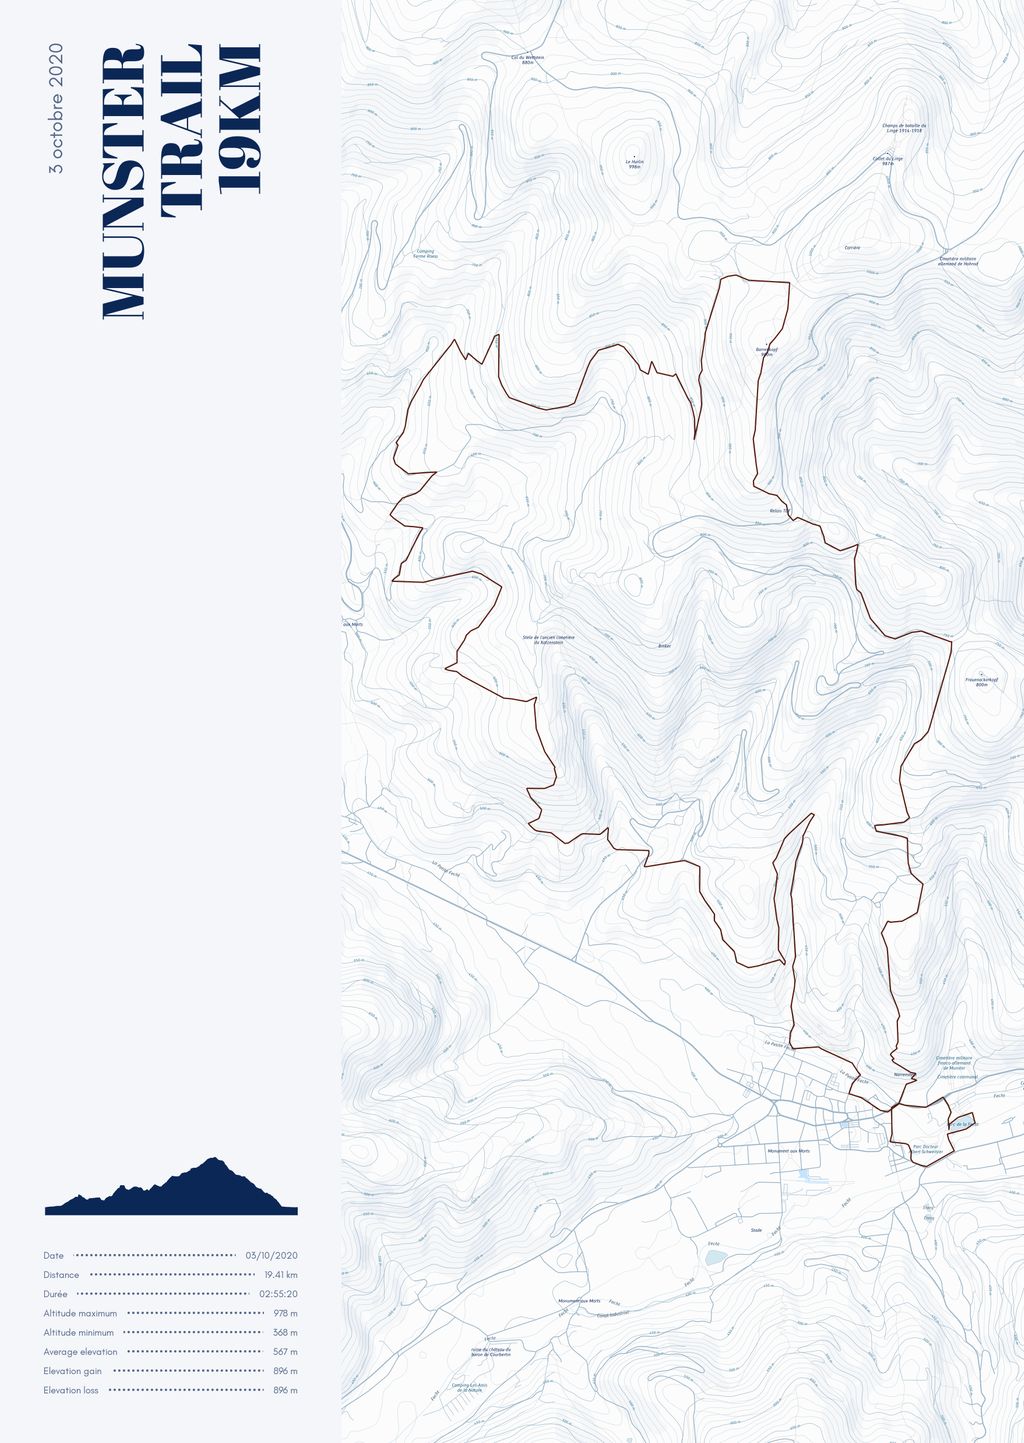 Póster con un mapa de Munster
Trail 
19km